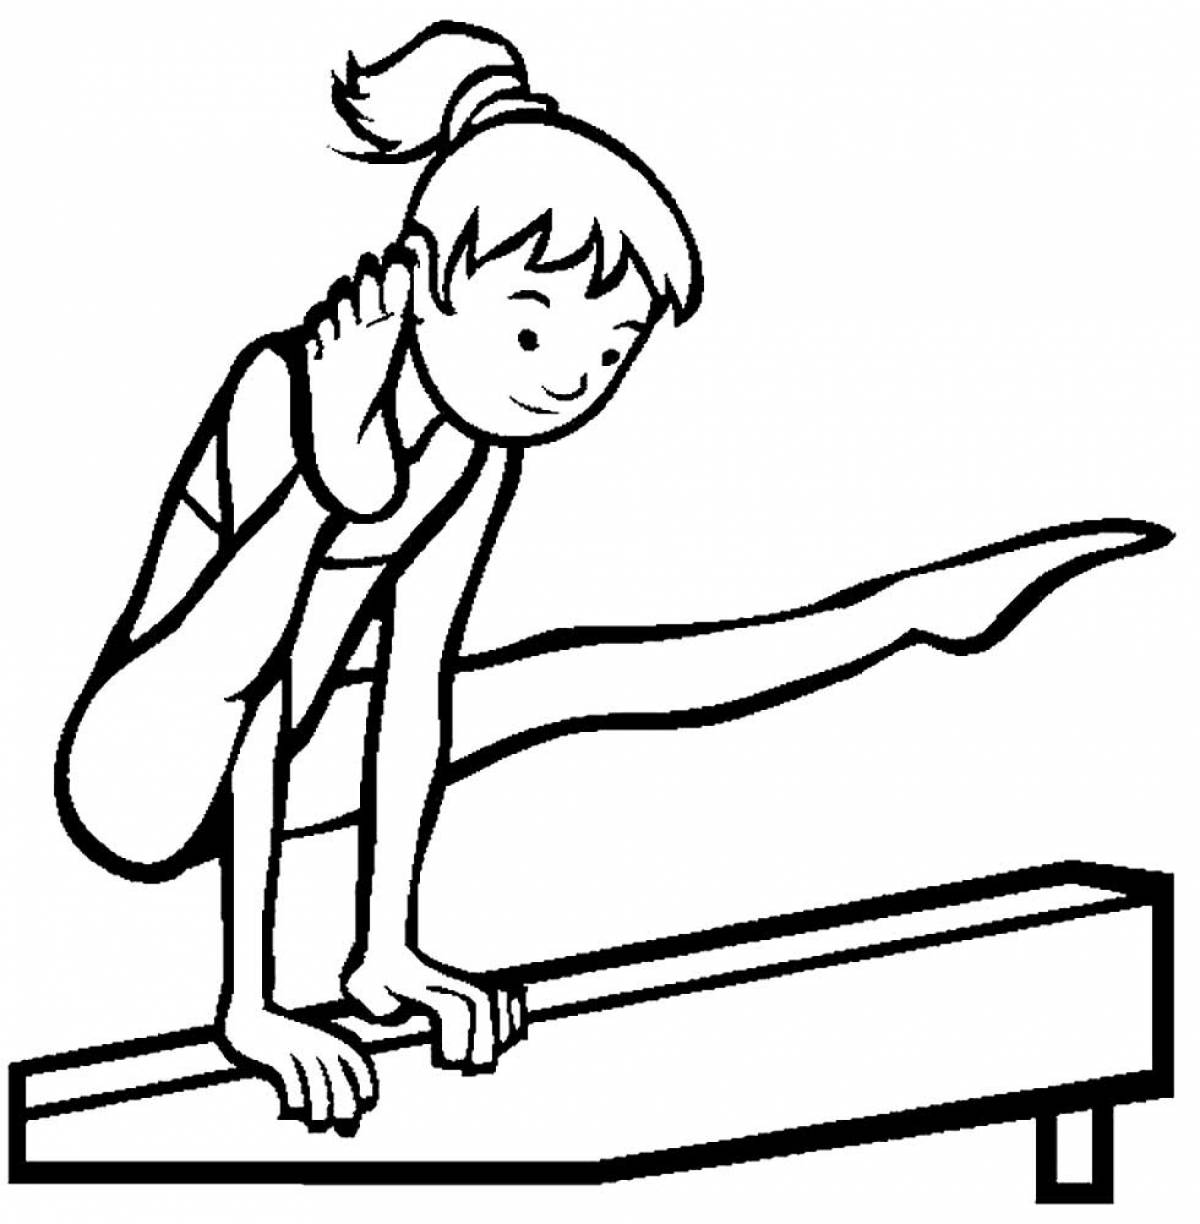 Gymnastics on the balance beam